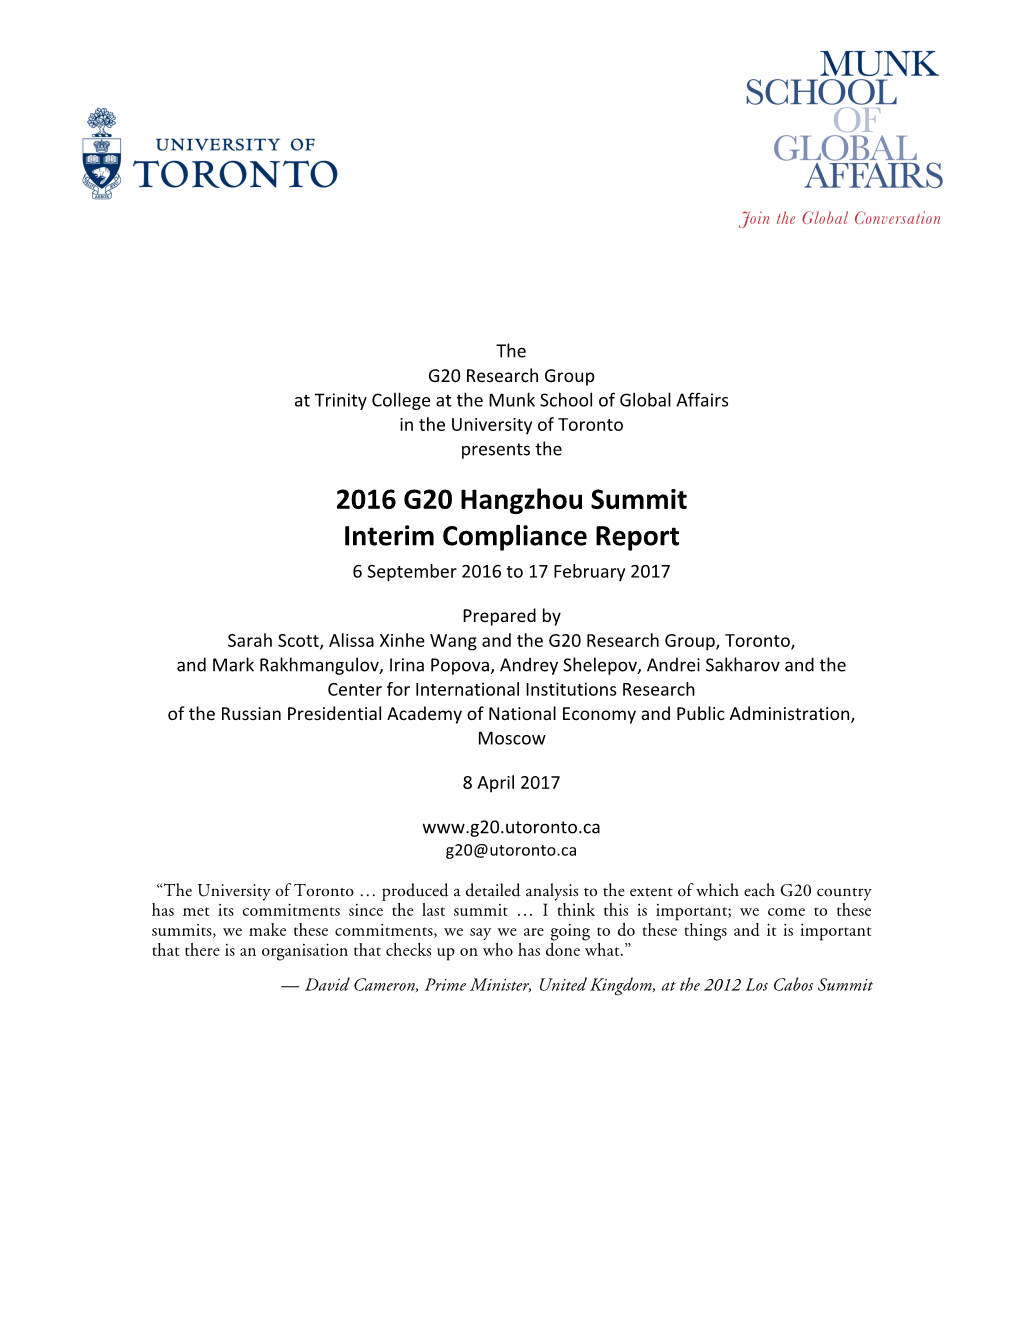 2016 G20 Hangzhou Summit Interim Compliance Report 6 September 2016 to 17 February 2017